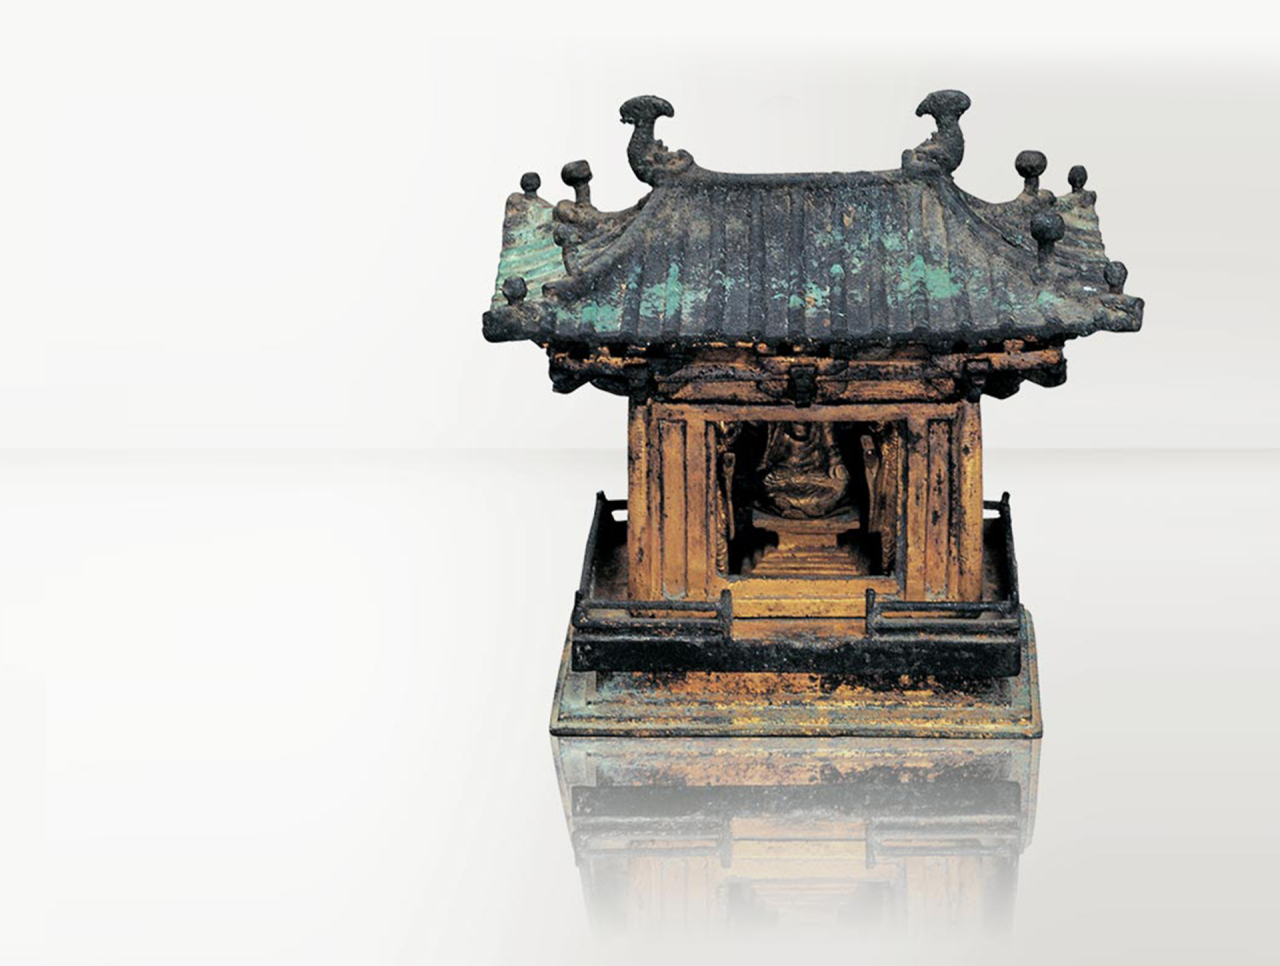 The Portable Shrine of Gilt-bronze Buddha Triad (CHA)